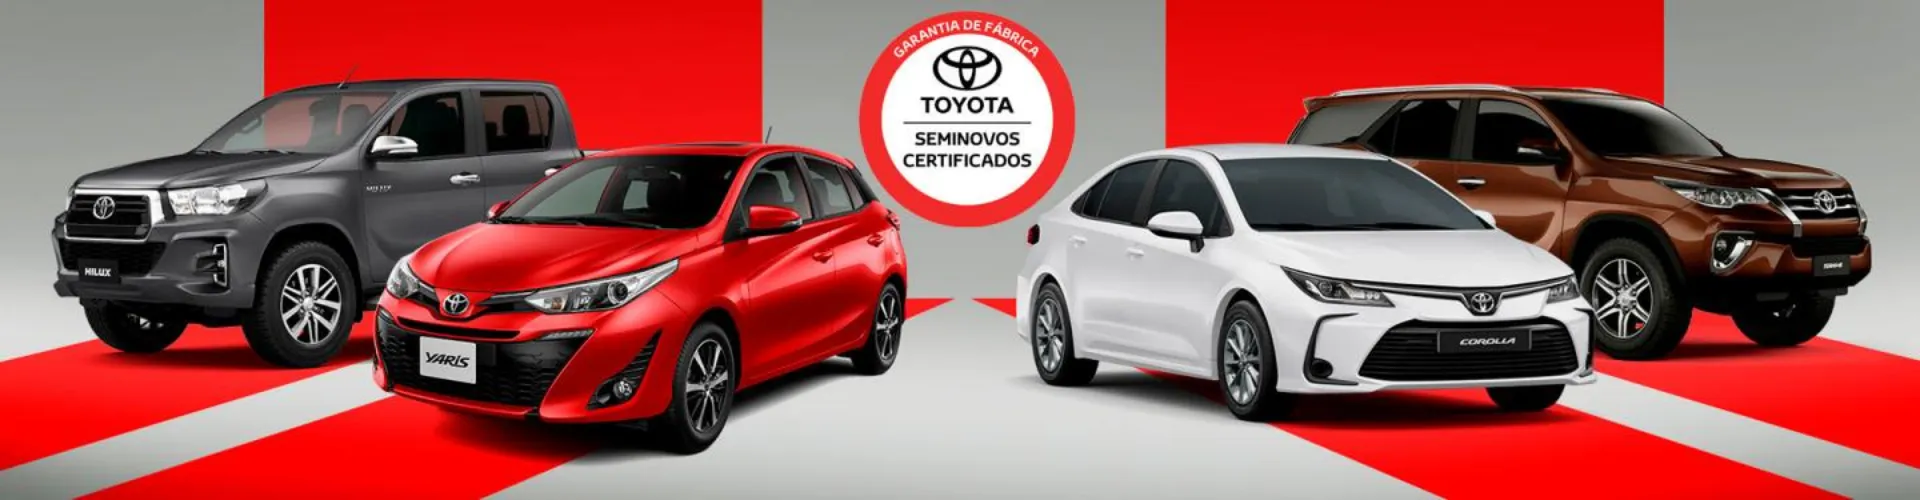 Seminovos Certificados Toyota